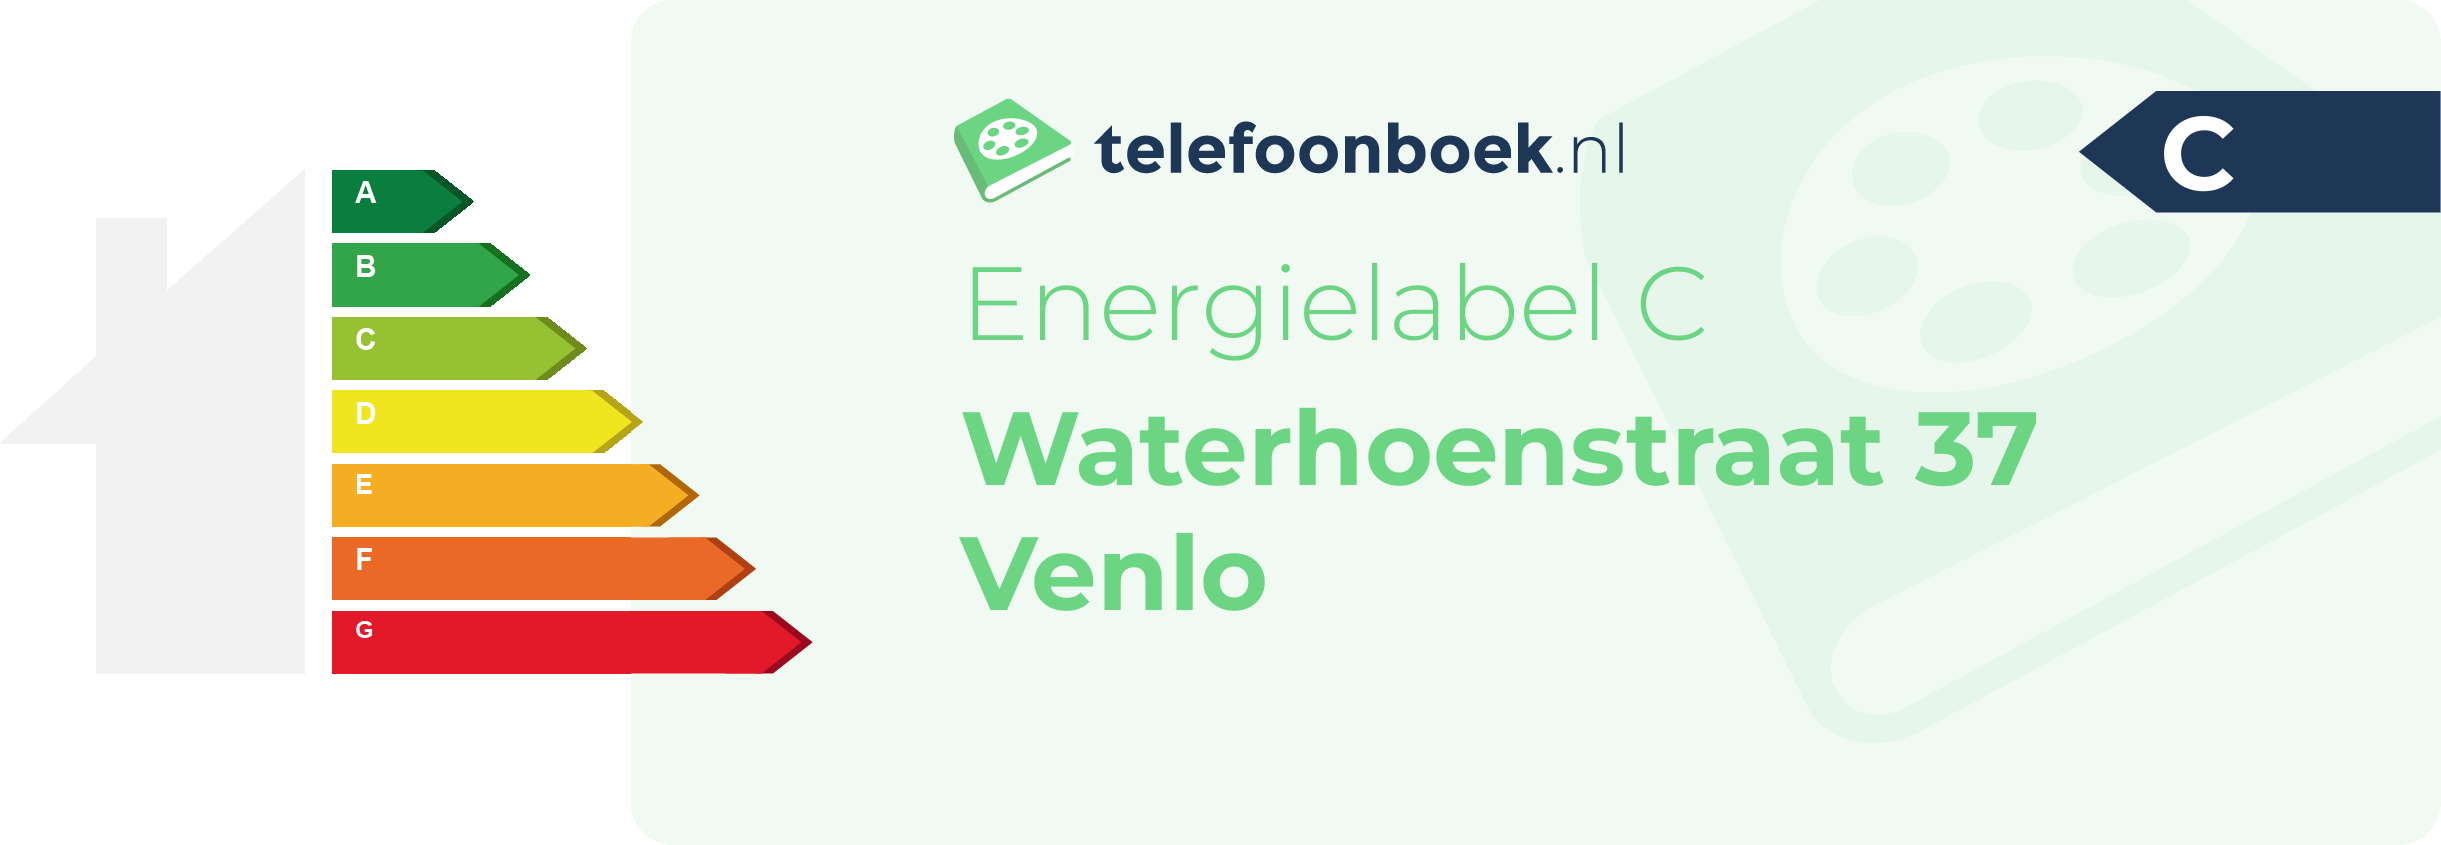 Energielabel Waterhoenstraat 37 Venlo